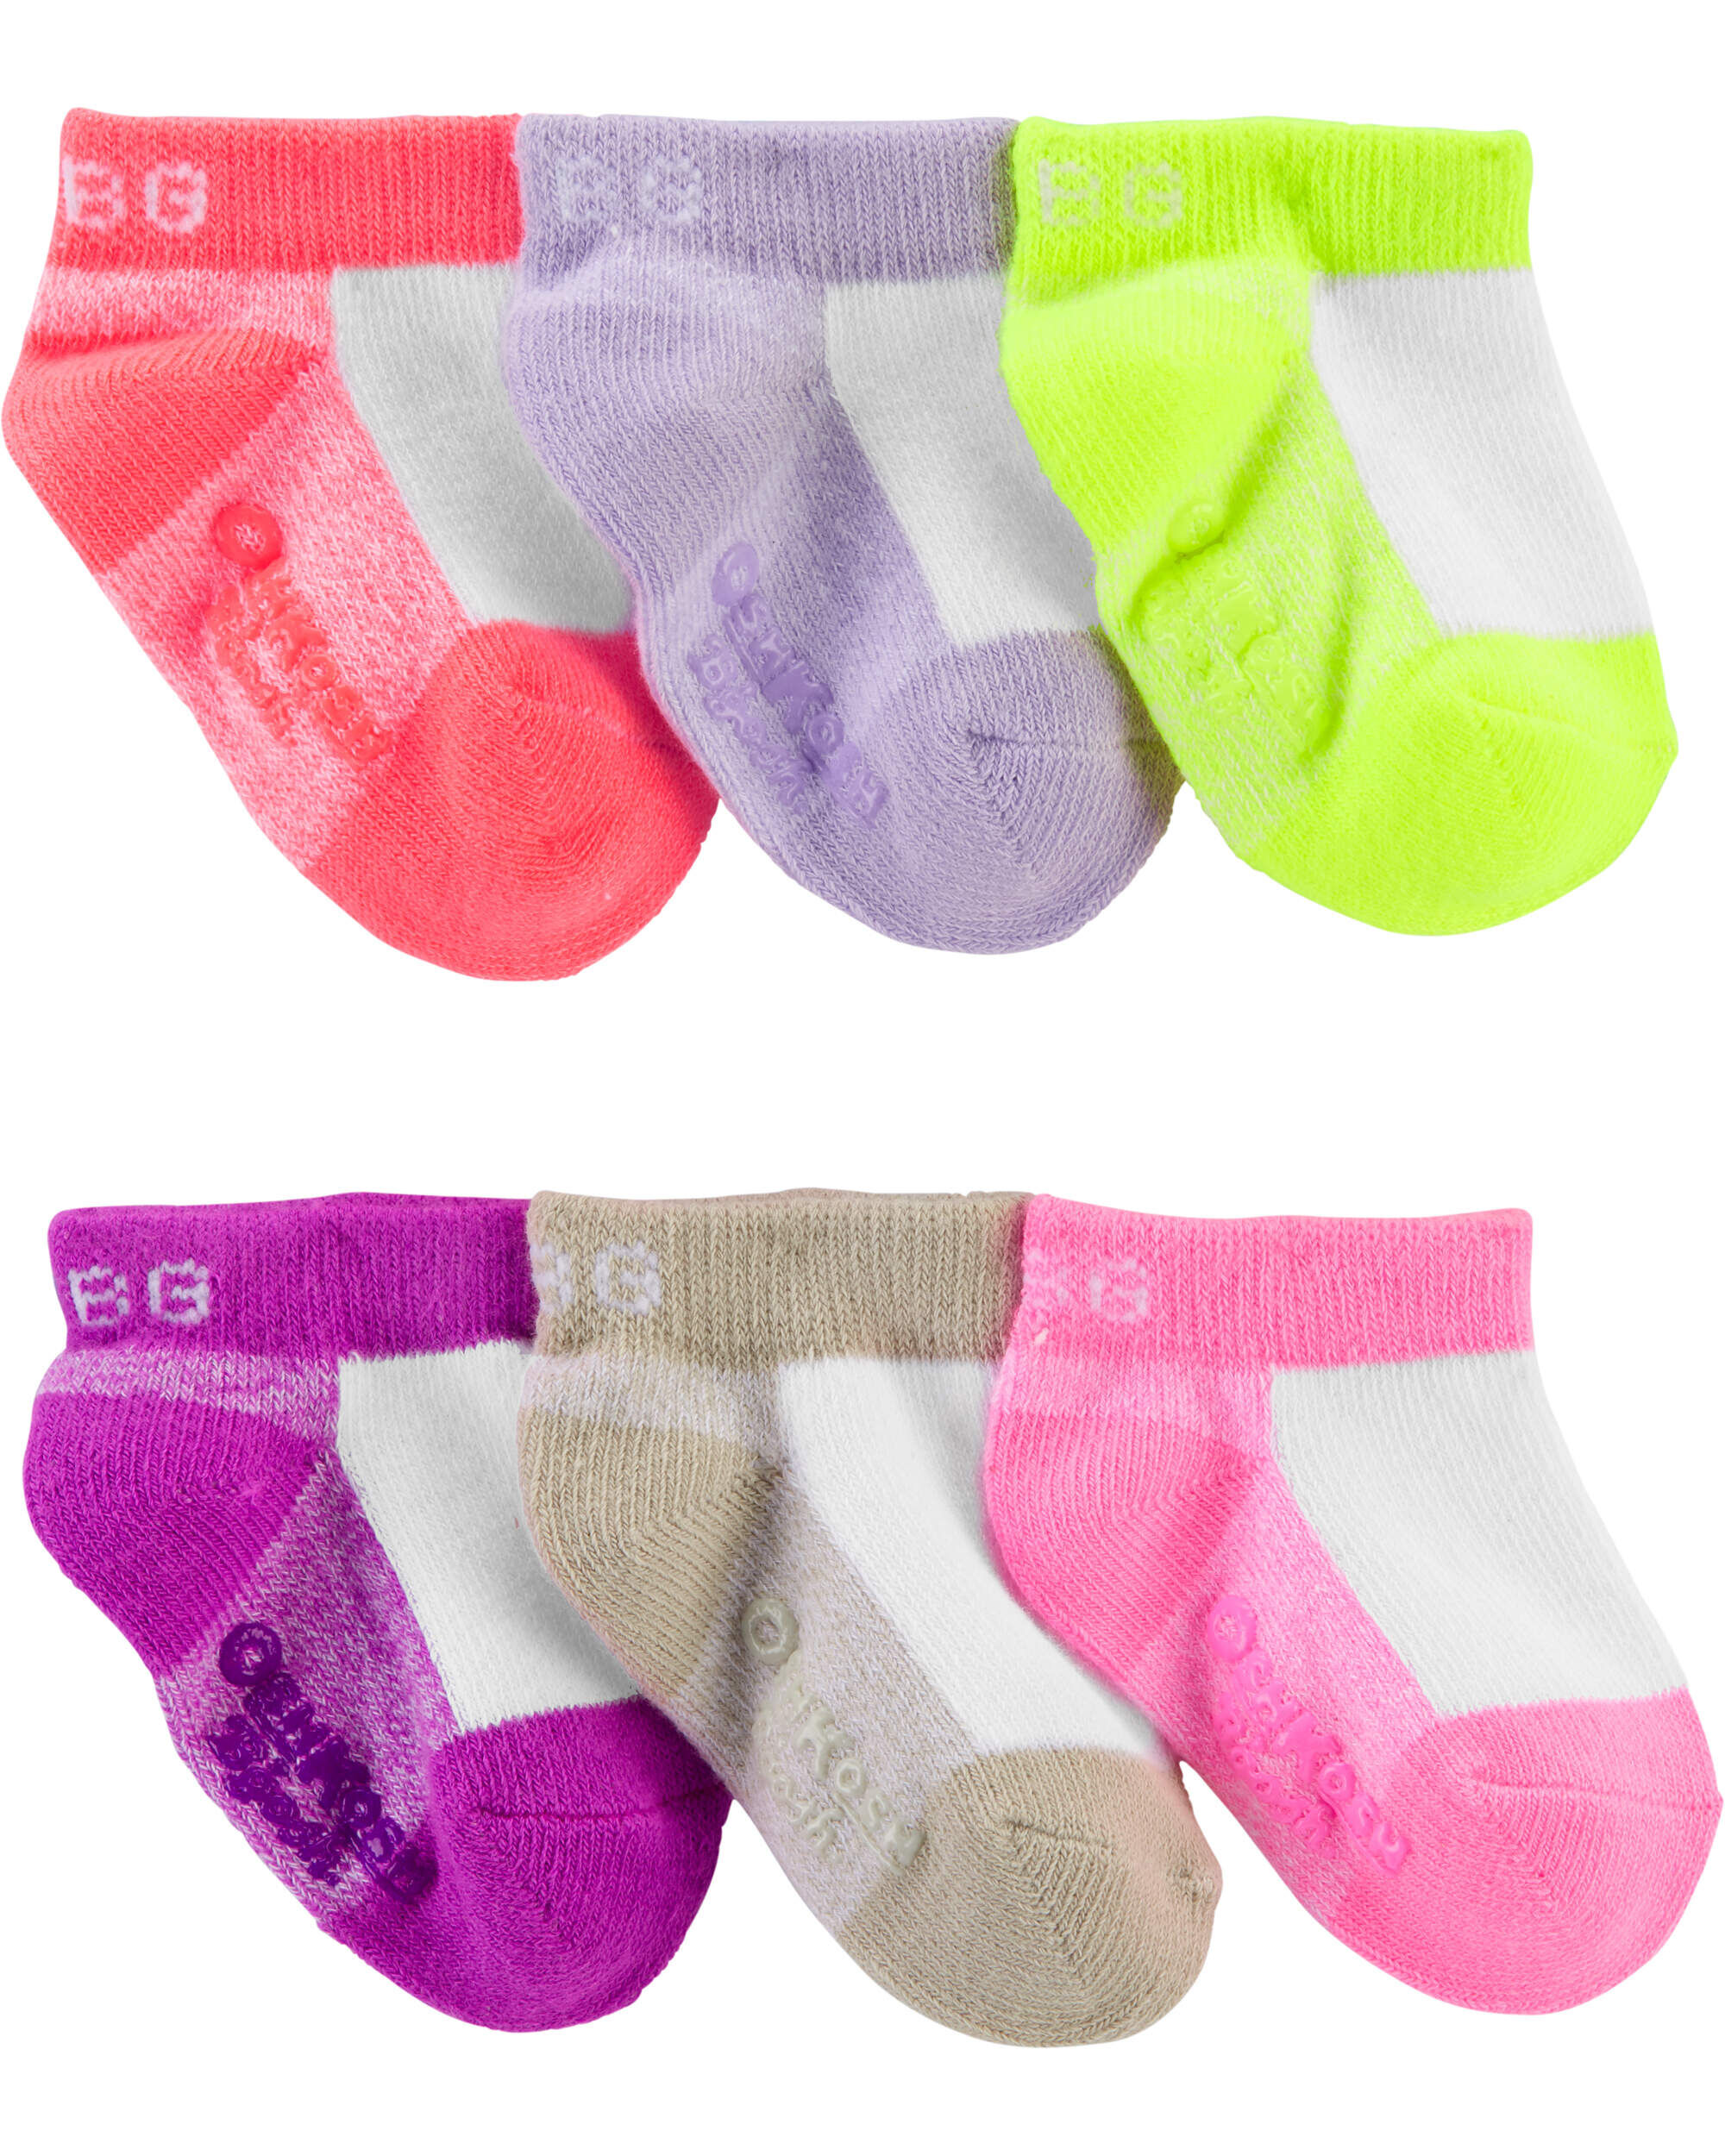 Carters Baby 6-Pack Neon Ankle Socks